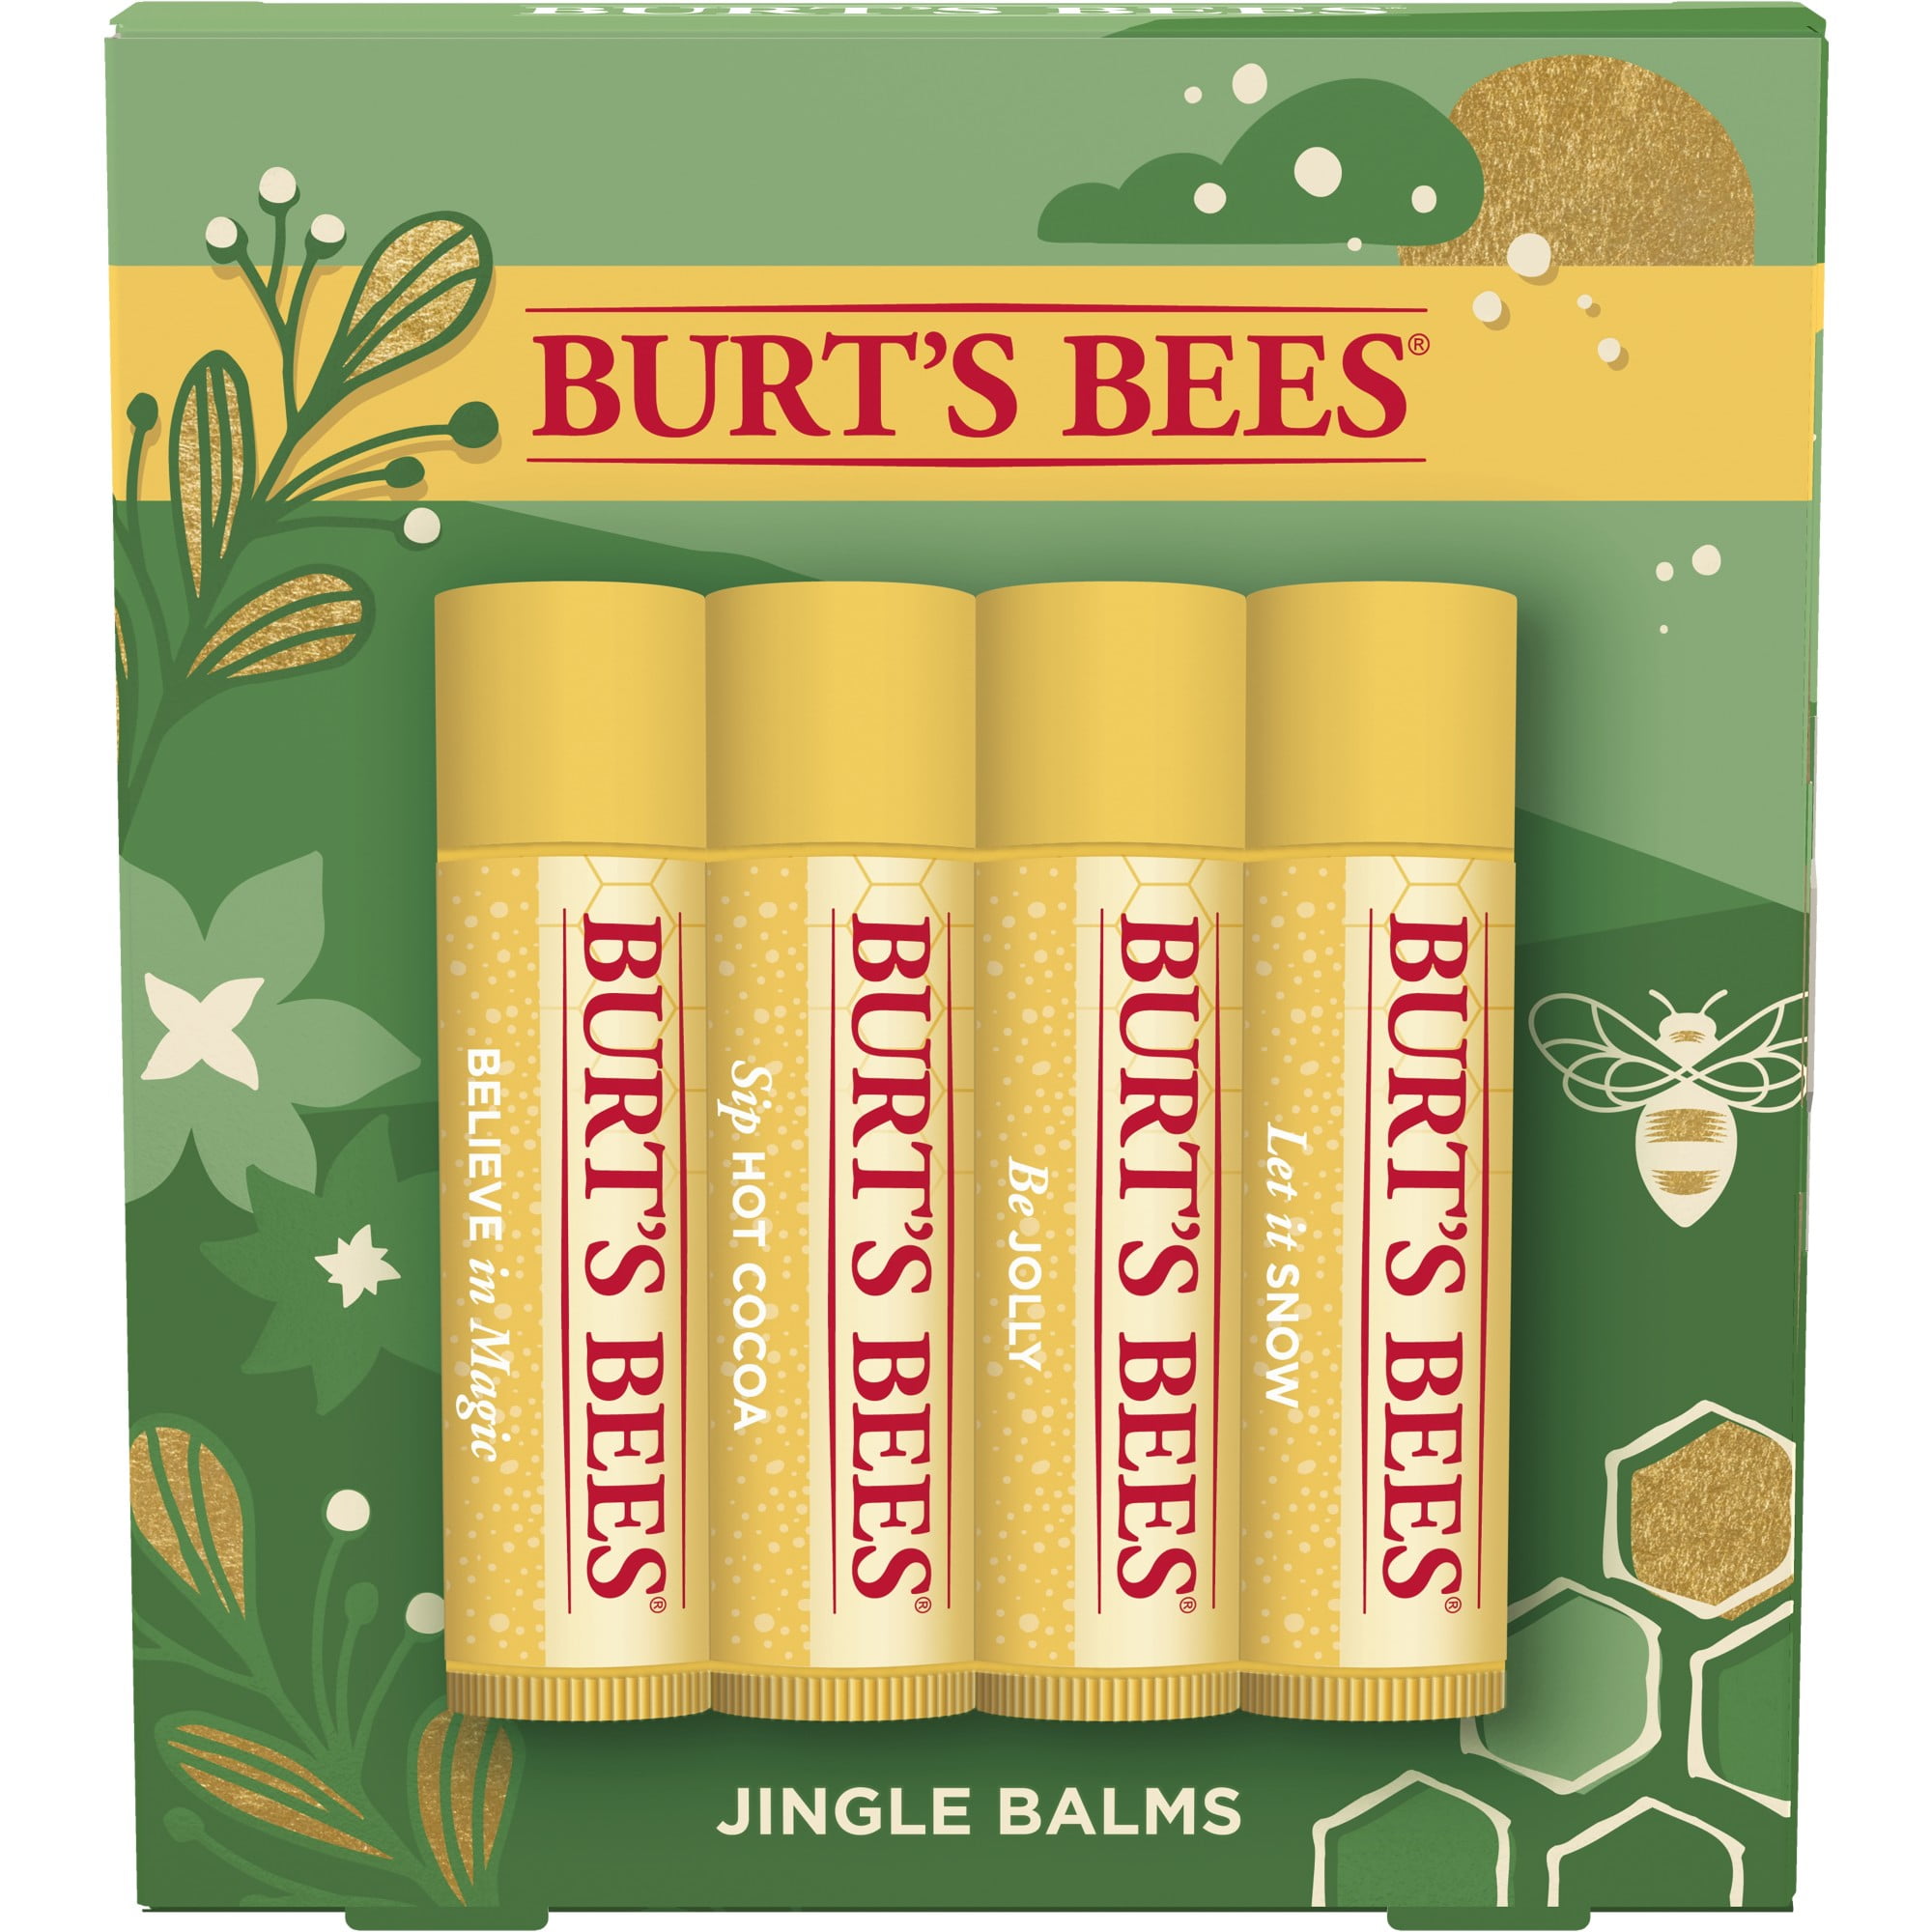 Burt's Bees Jingle Balms, Lip Balm Holiday Gift Set, Natural